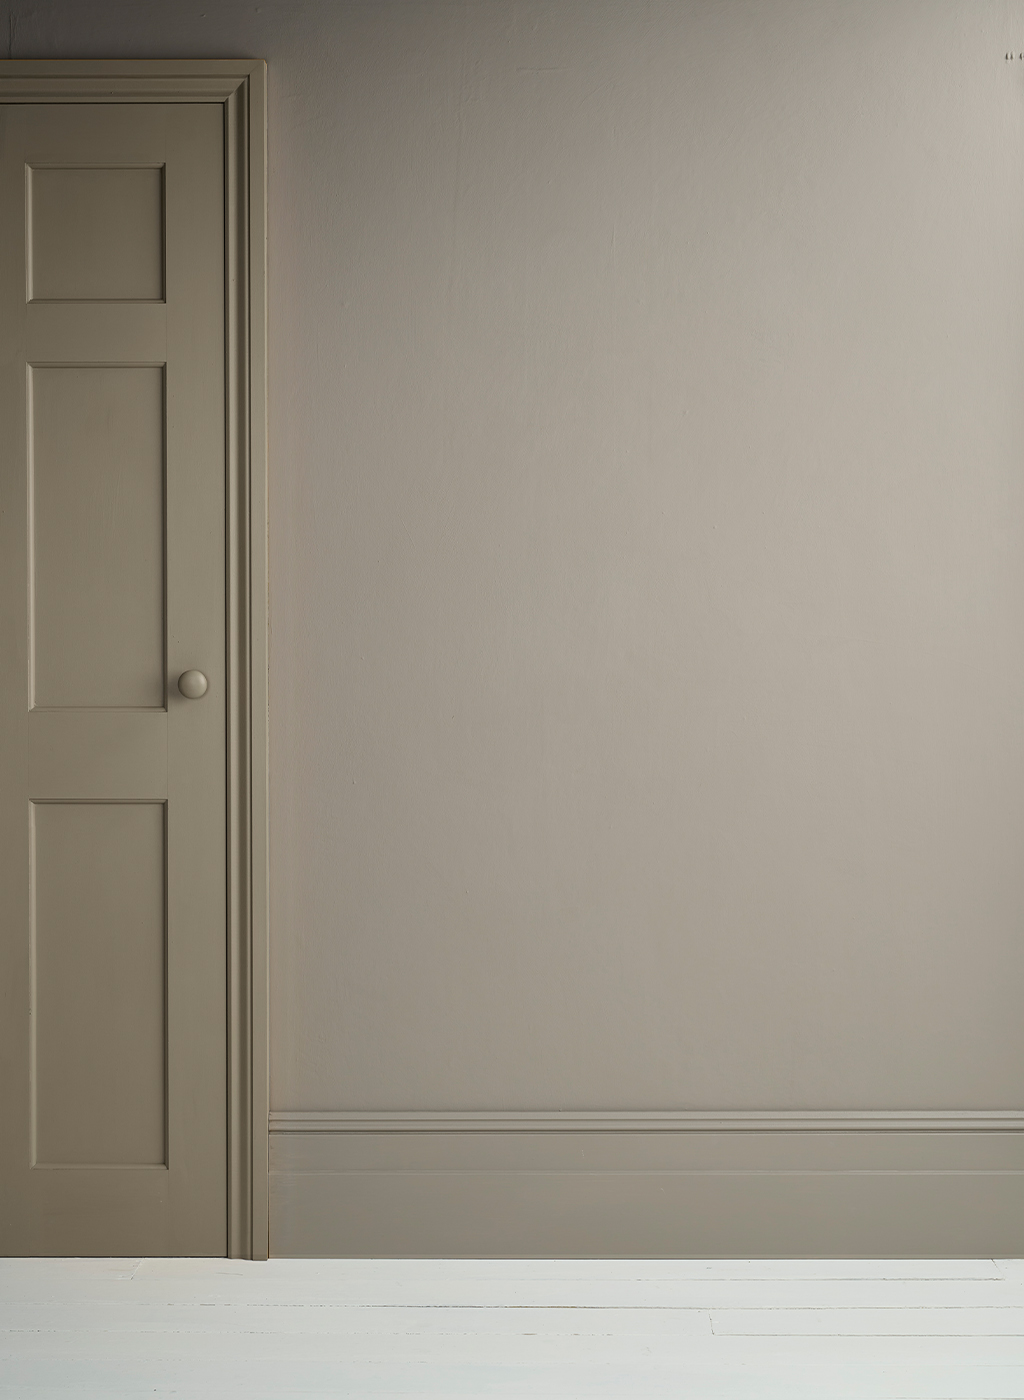 Annie Sloan Satin Paint  French Linen 750ml grå brun interiör Tålig glada ungmöns diversehandel